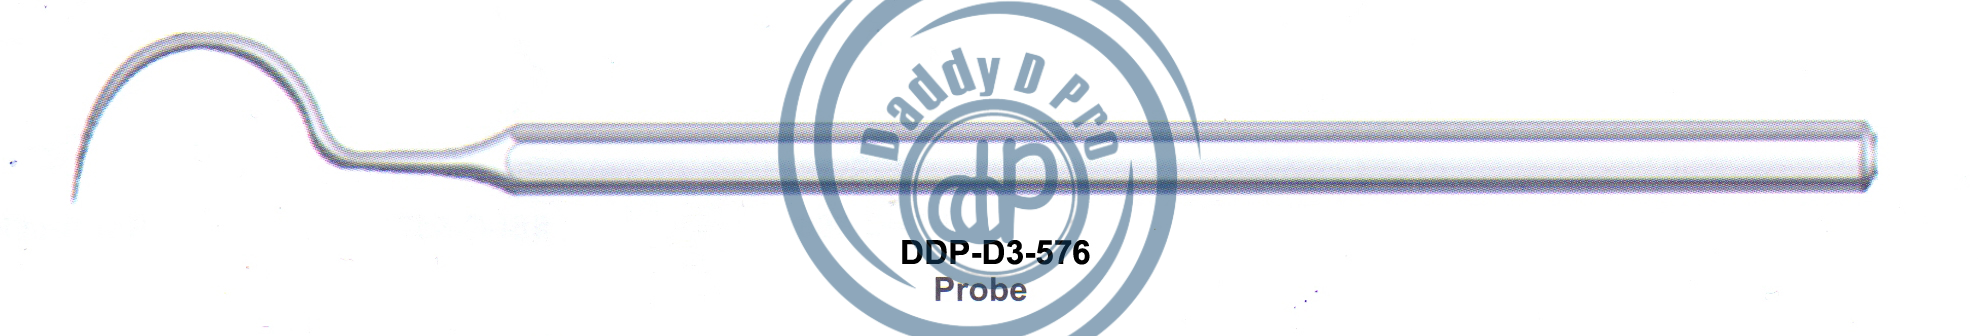 images/DDP-D3-576.png